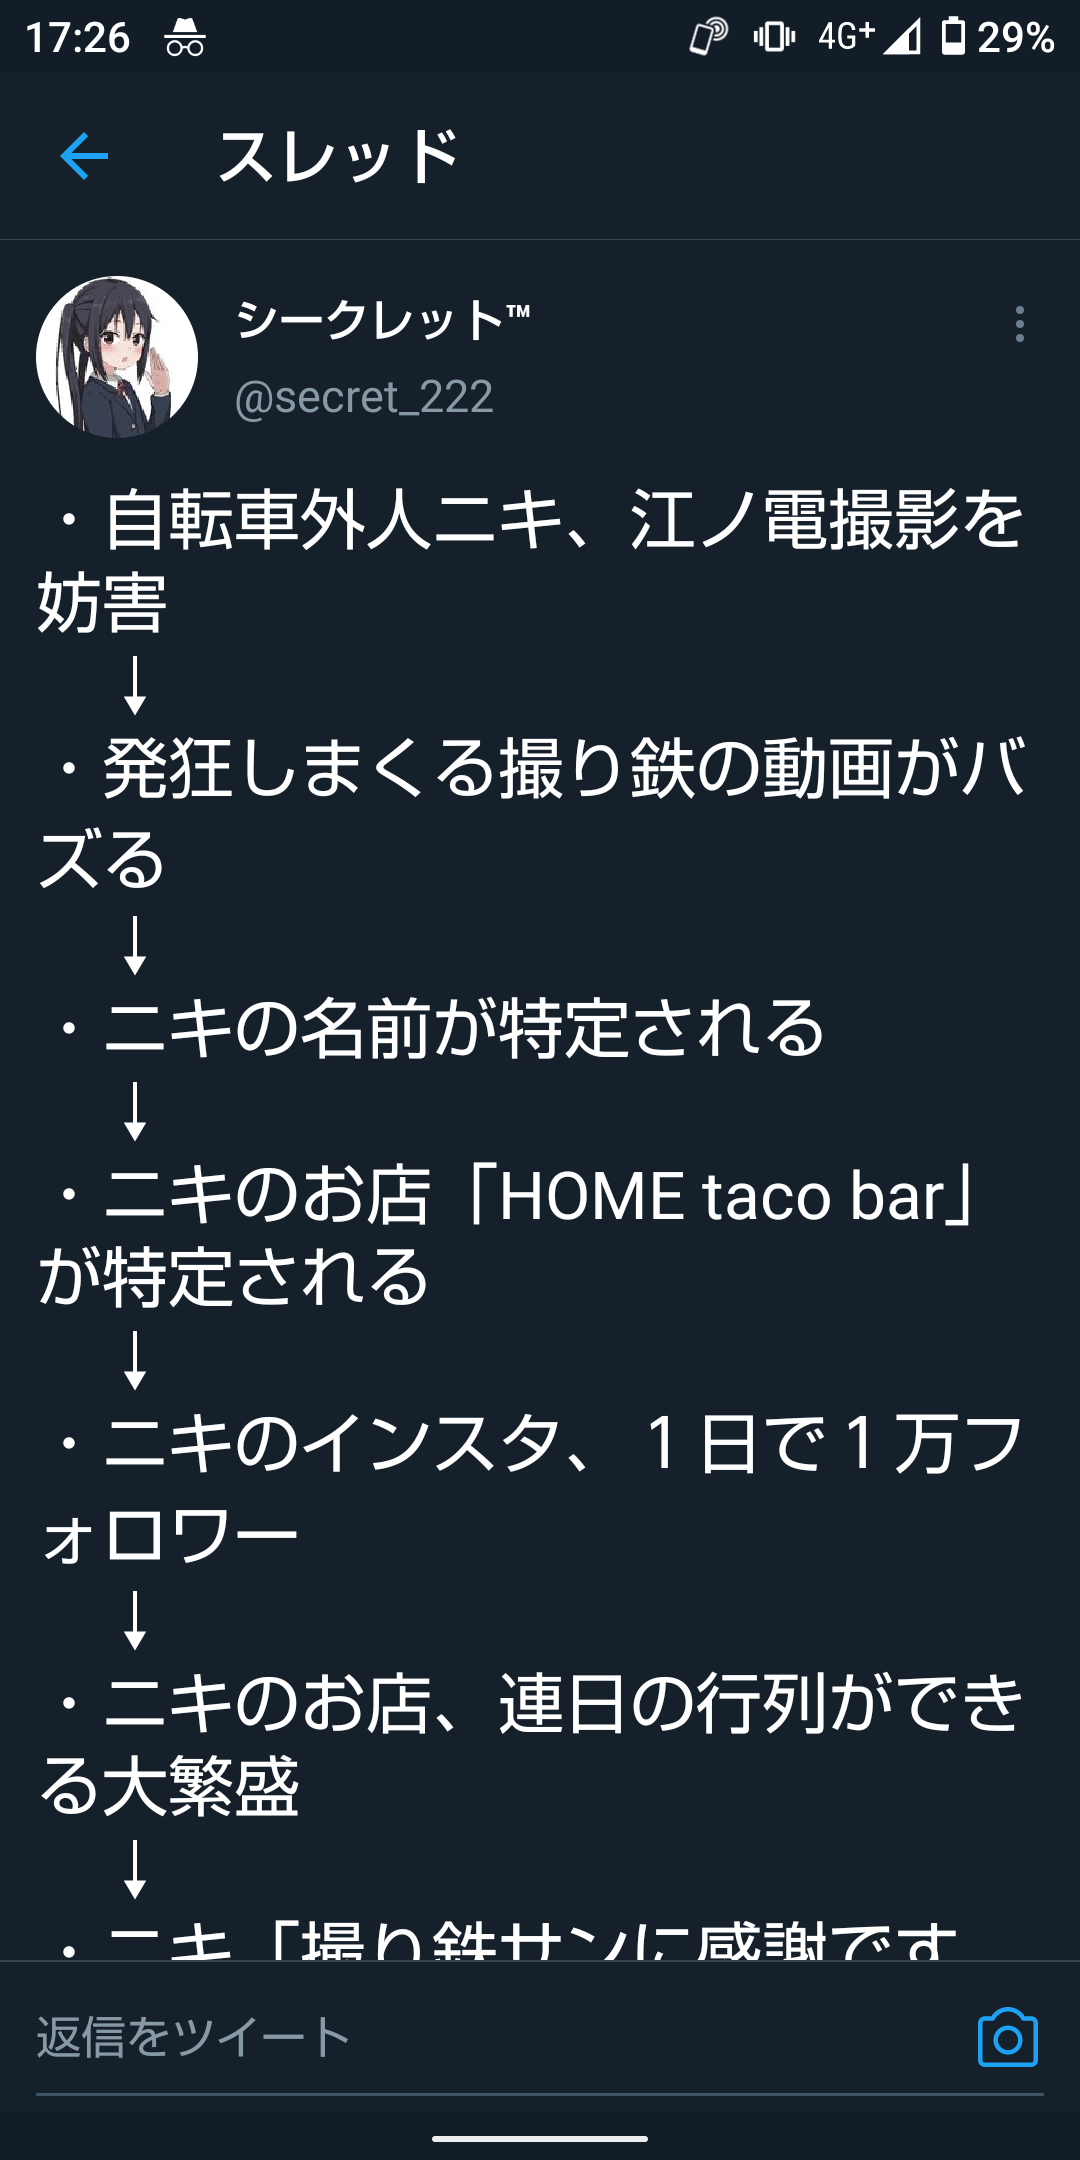 HOME Taco bar　江ノ電自転車ニキ